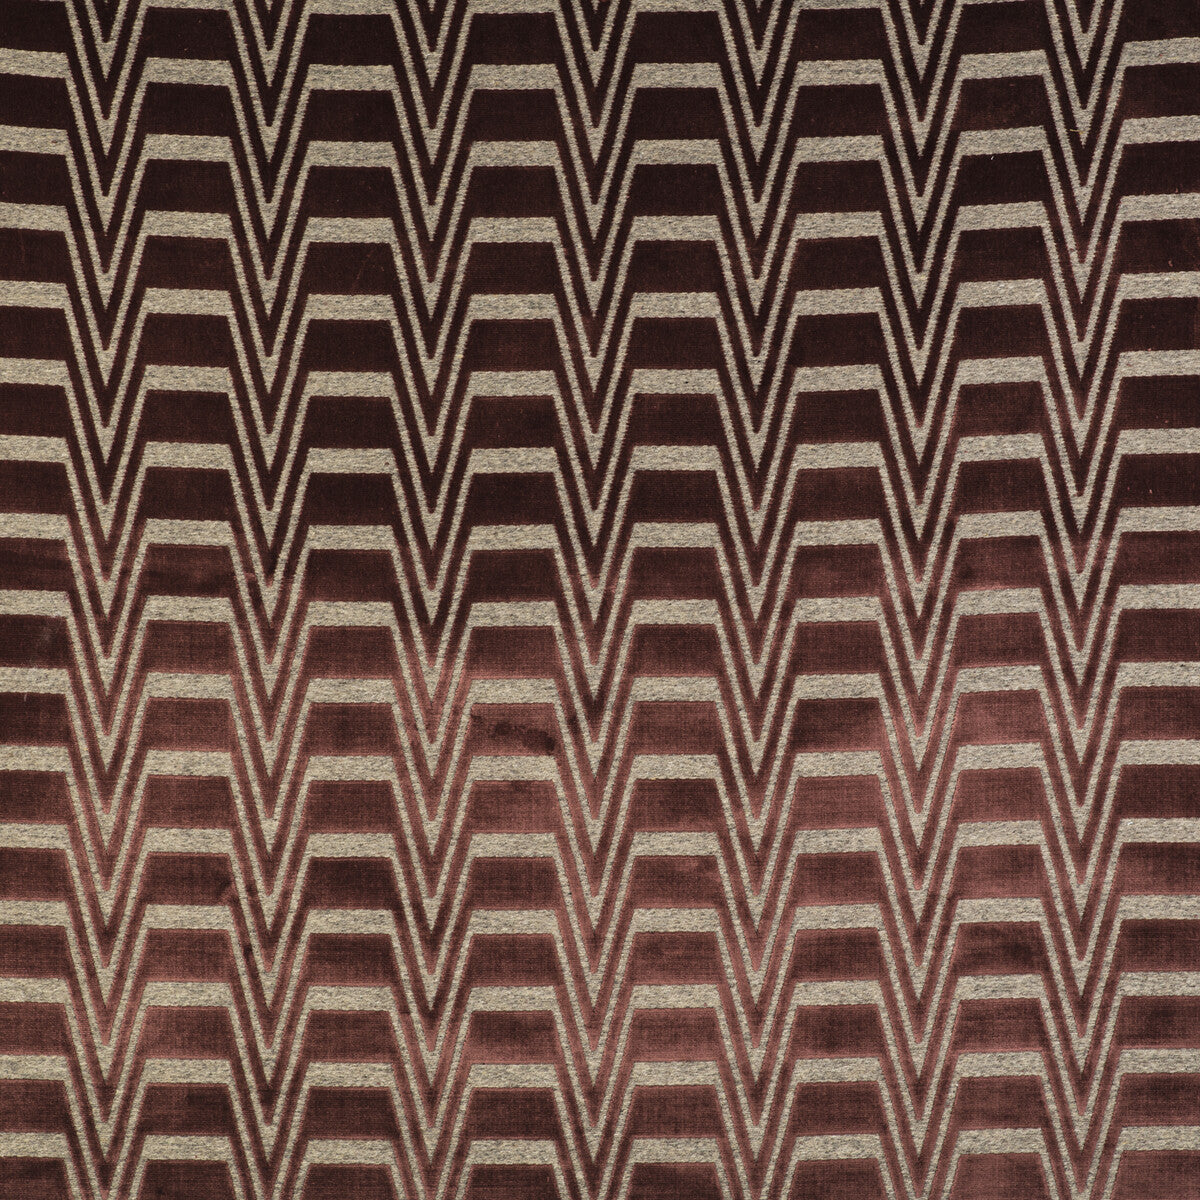 Meseta fabric in rosa/viejo color - pattern GDT5502.003.0 - by Gaston y Daniela in the Gaston Libreria collection